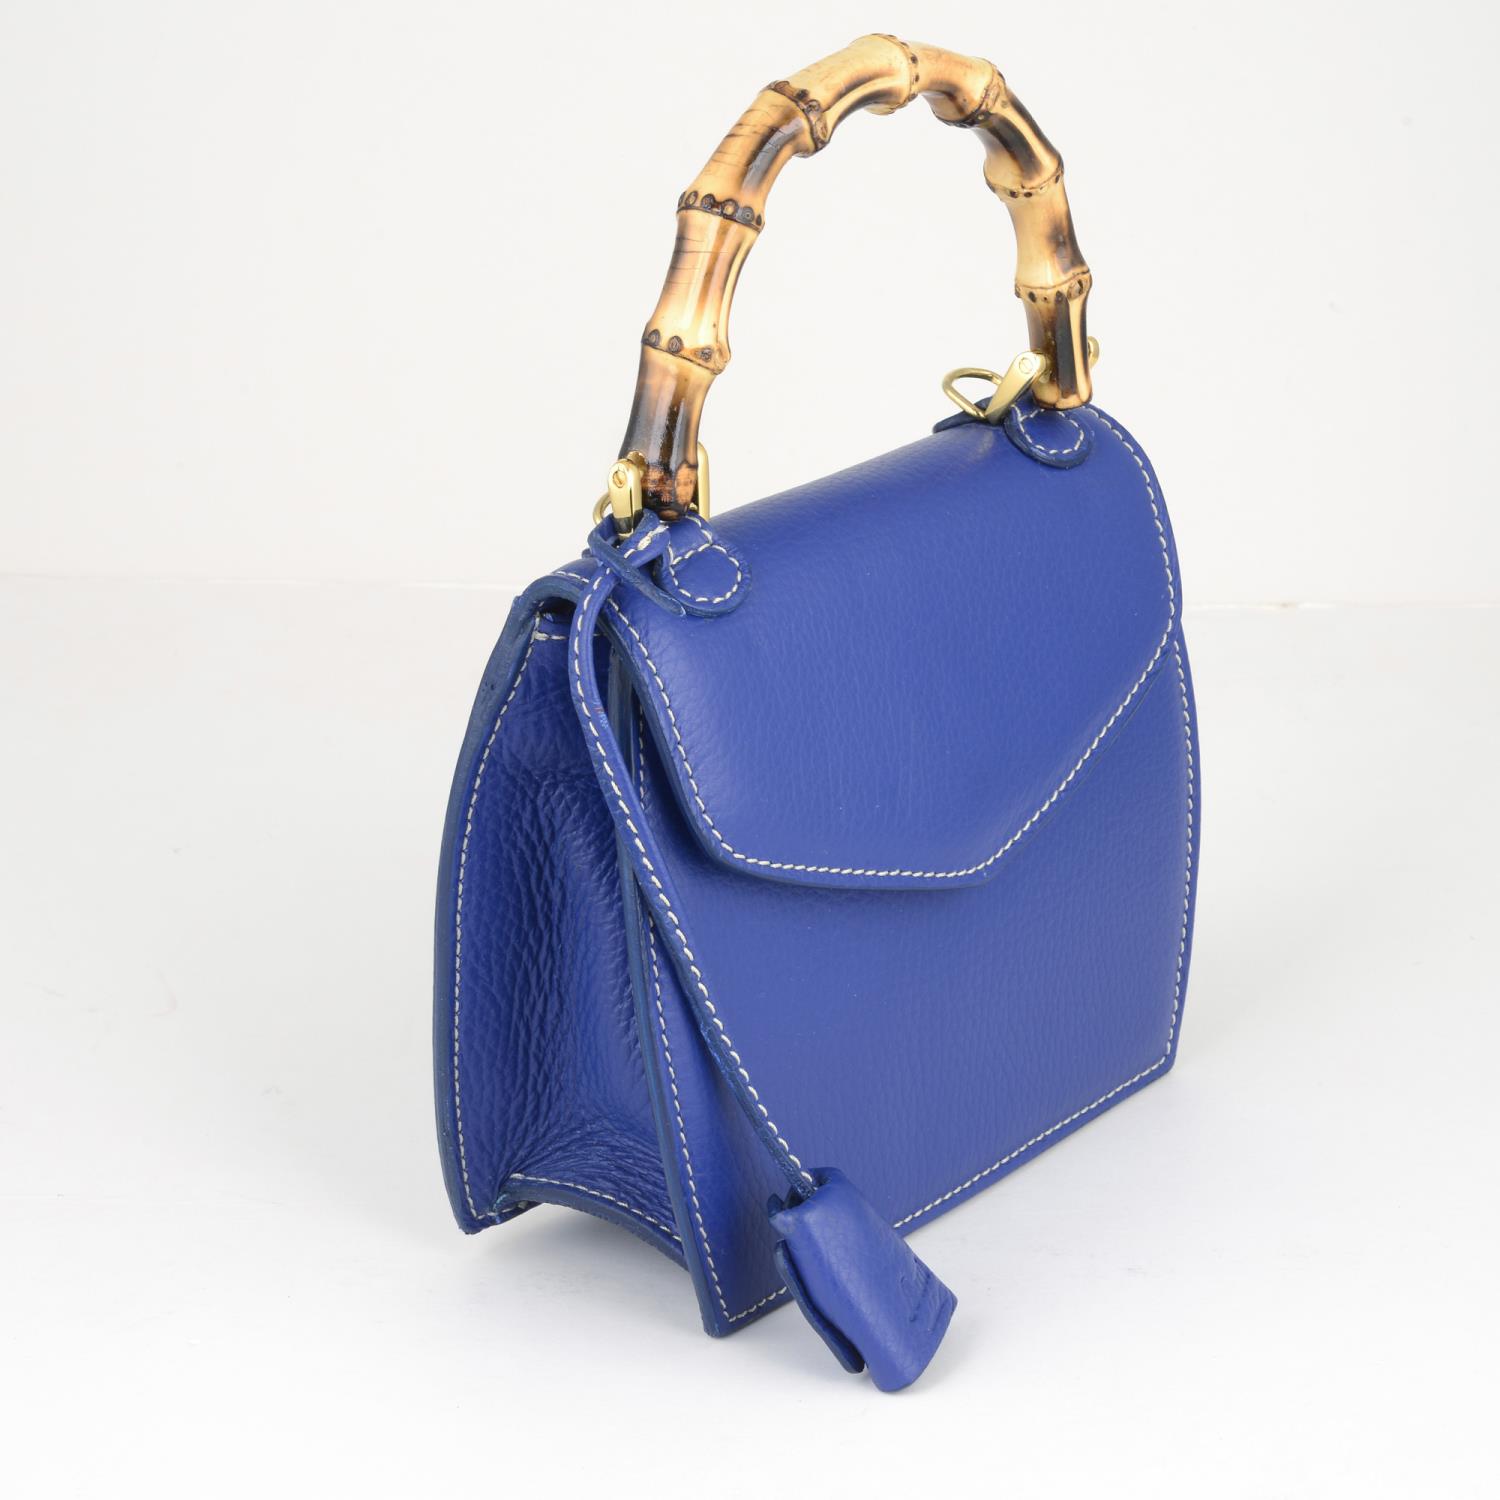 BUTI PELLETTERIE - a mini Minny royal blue leather handbag. - Image 4 of 5